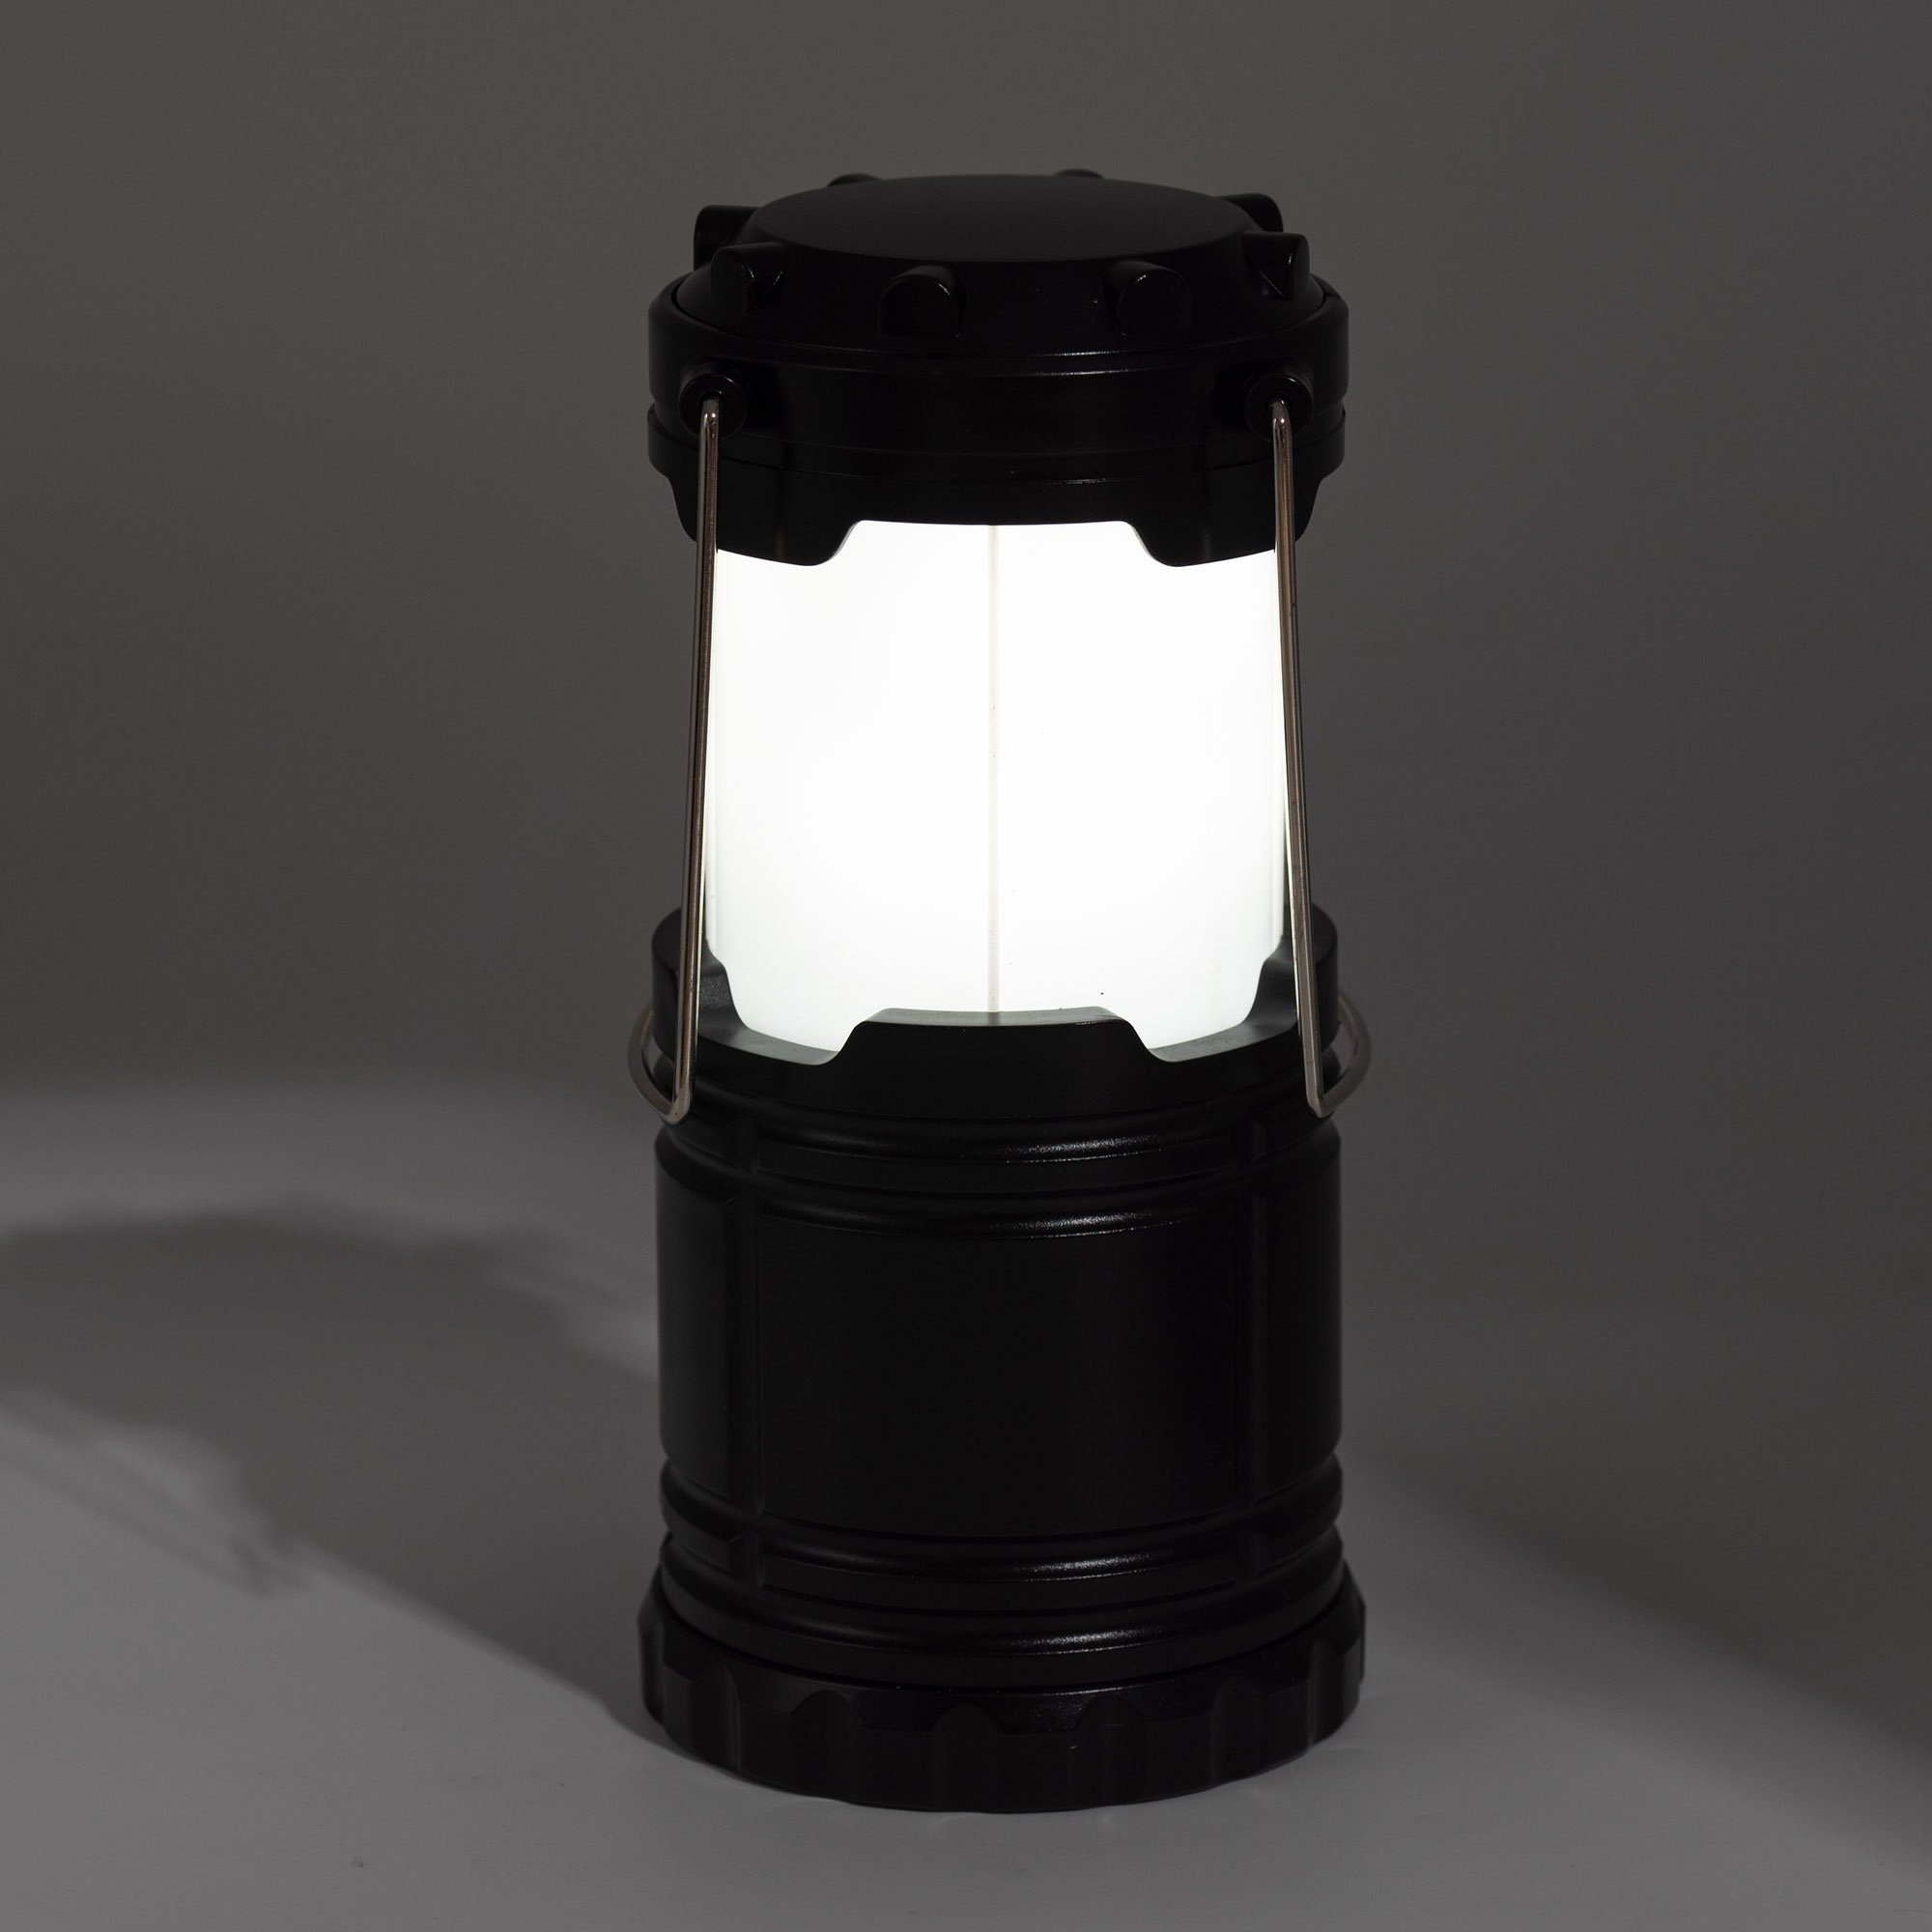 BENSON Taschenlampe 2in1 Zelt Effekt Leuchte Garten, Flammen, Laterne, Campinglampe LED Lampe Batterie